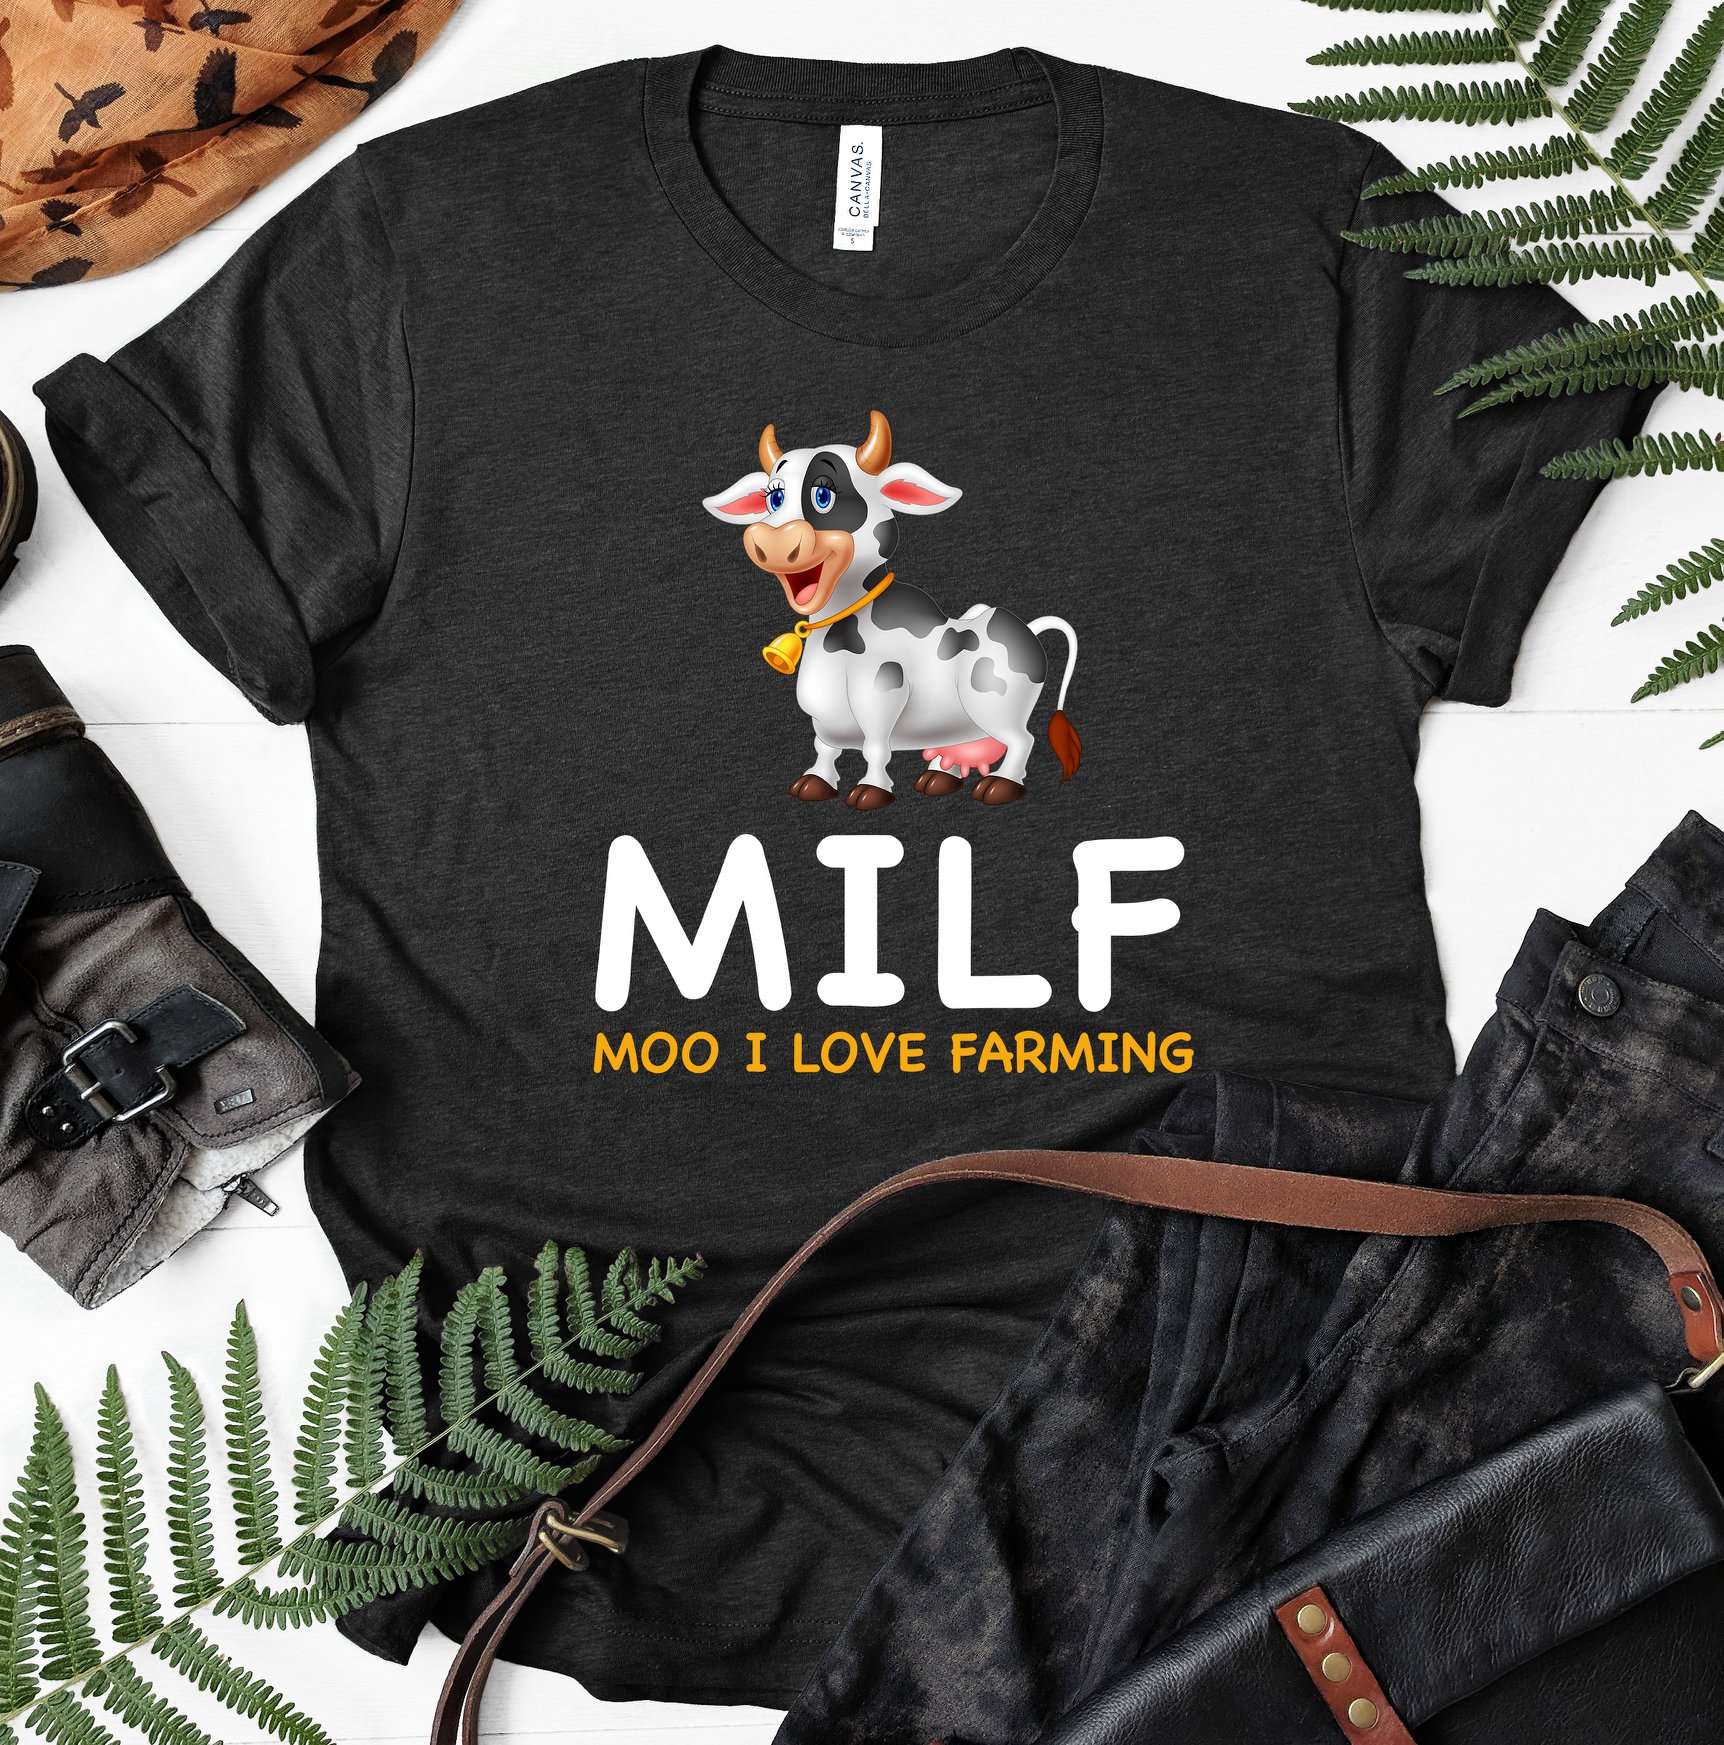 MILF moo I love farming - Moo milk cow, love farming shirt